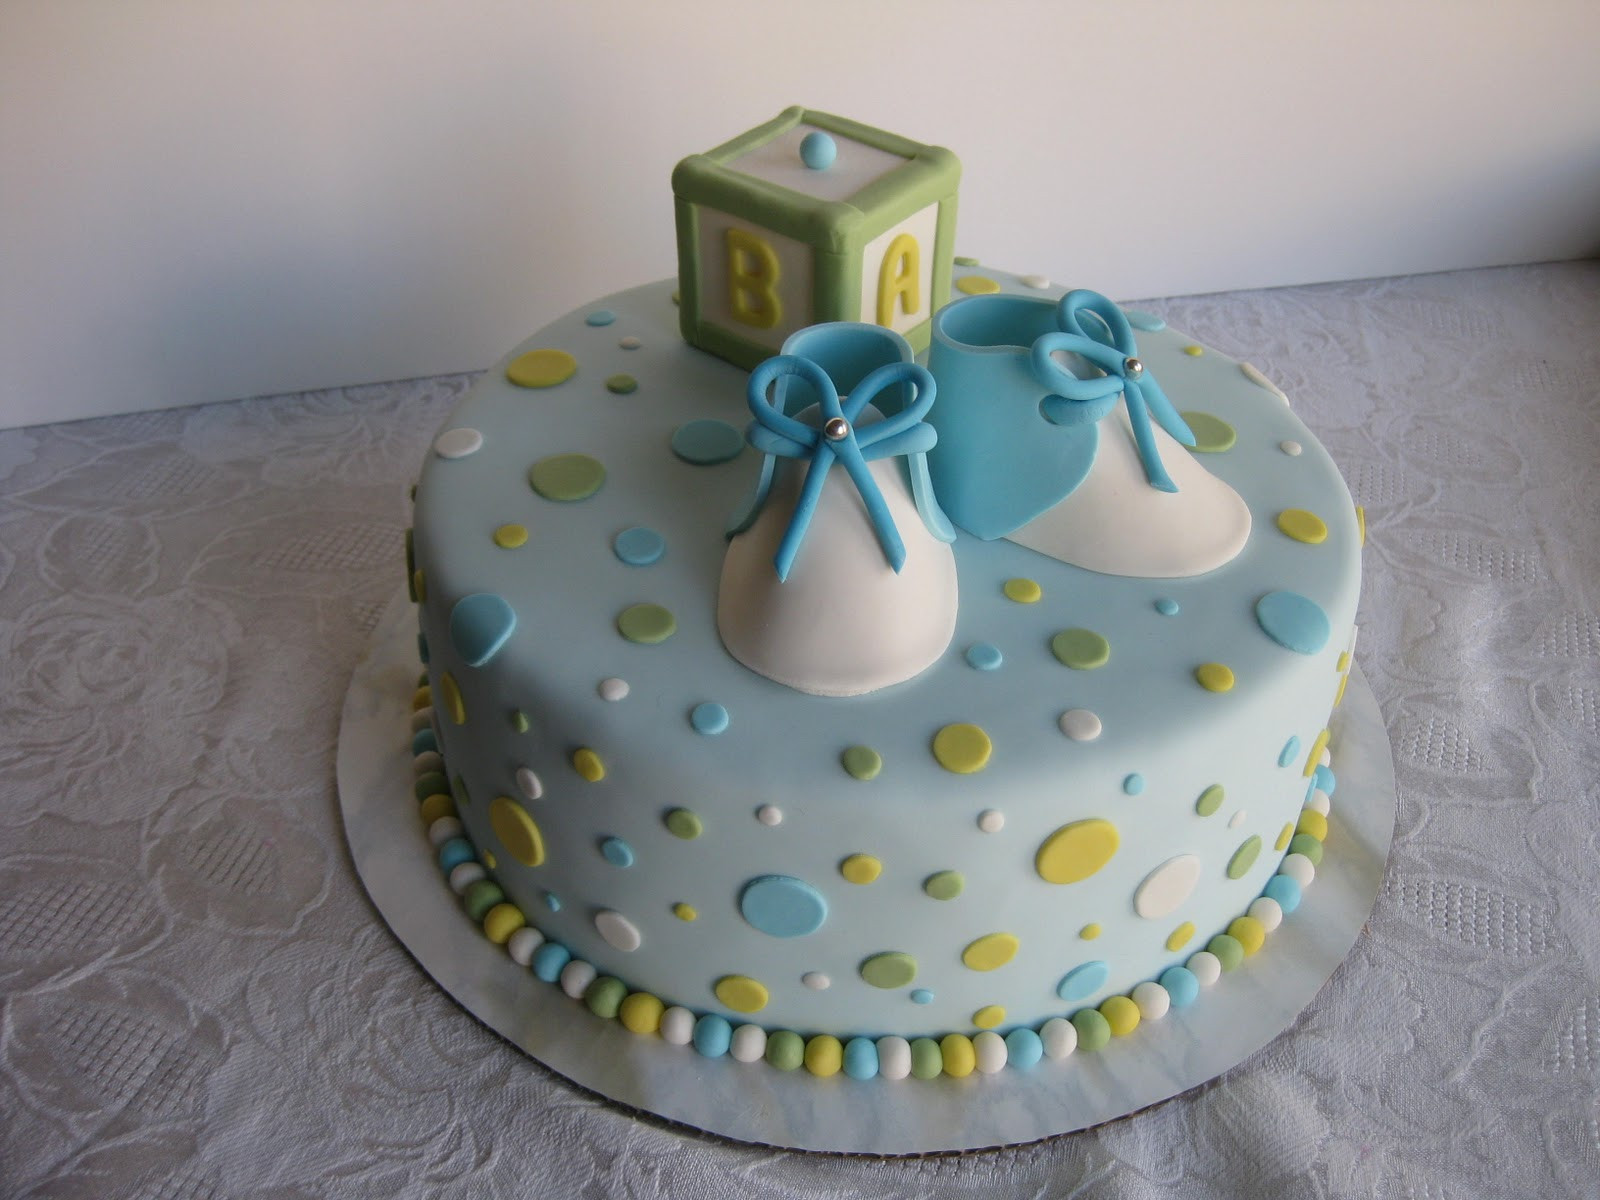 Baby Shower Cake Decoration Ideas
 10 Cool Cake Decorating Ideas